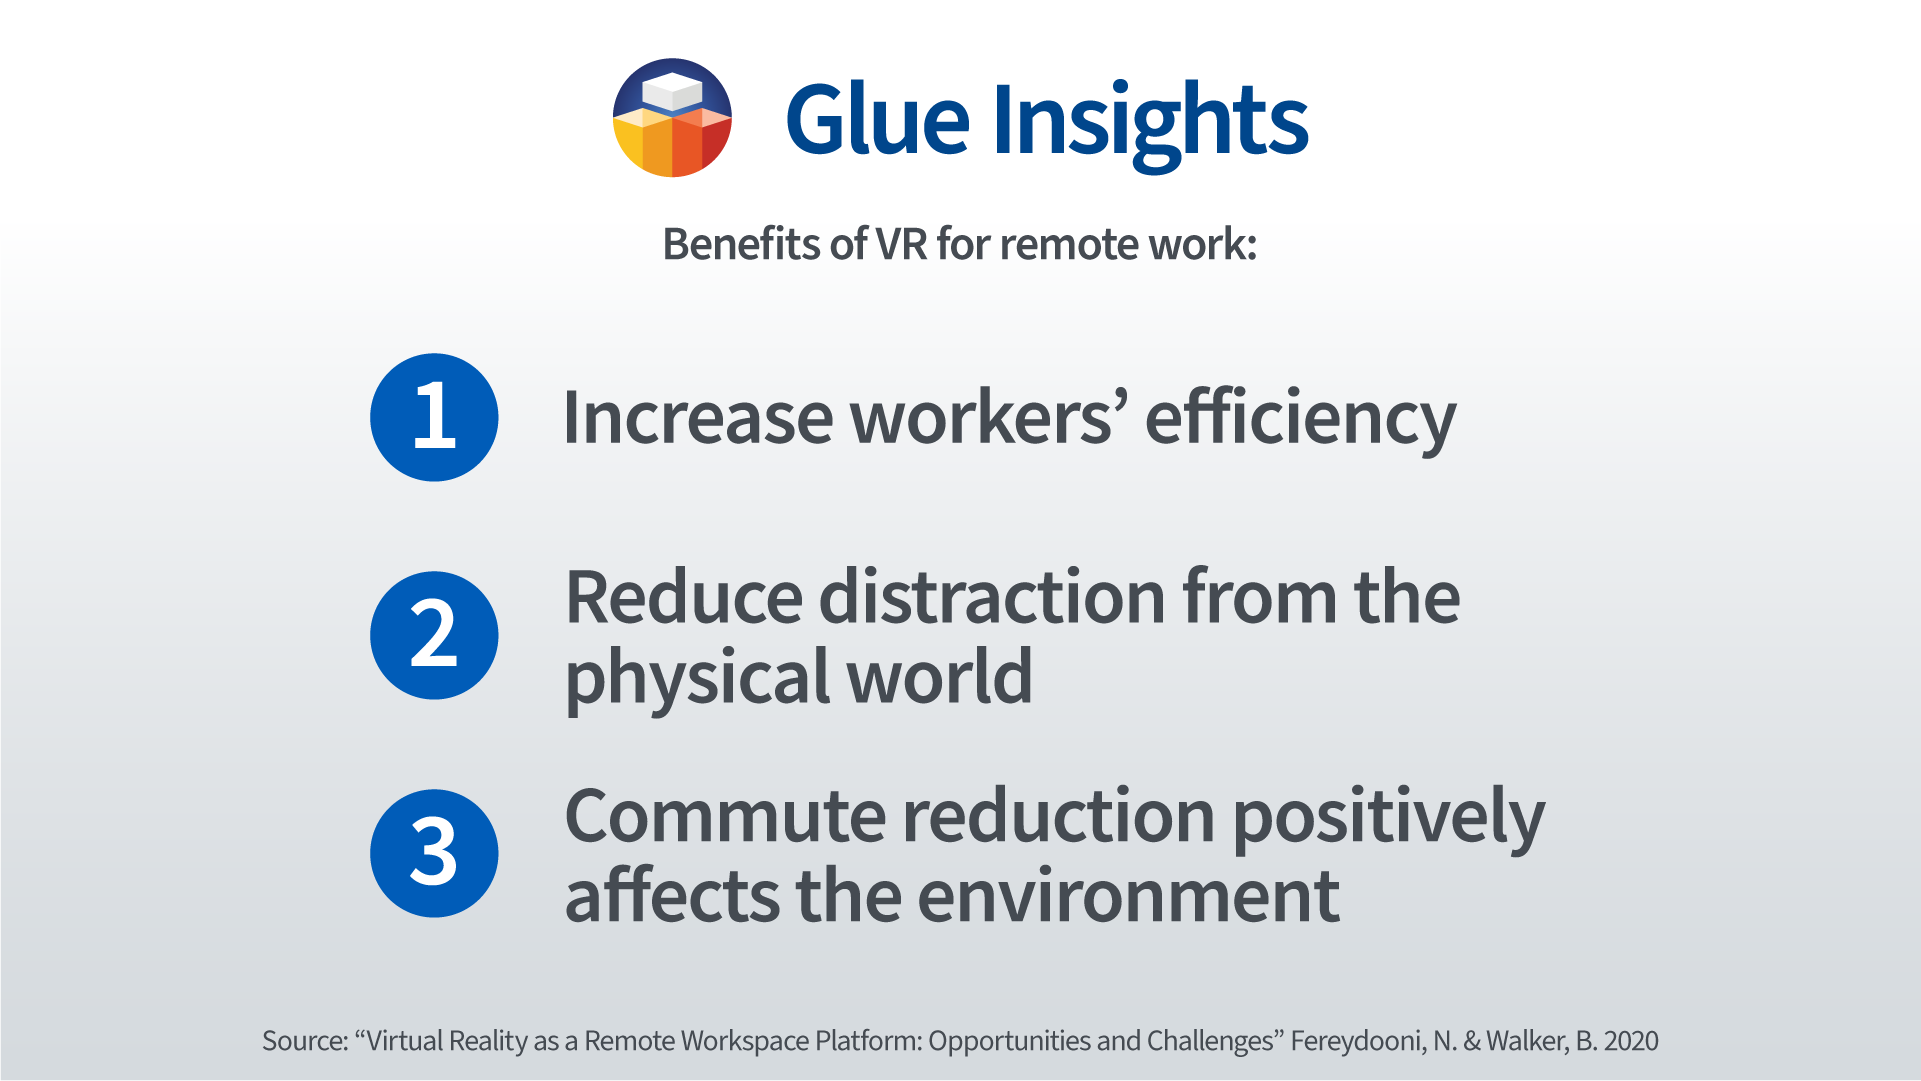 benefits of remote work